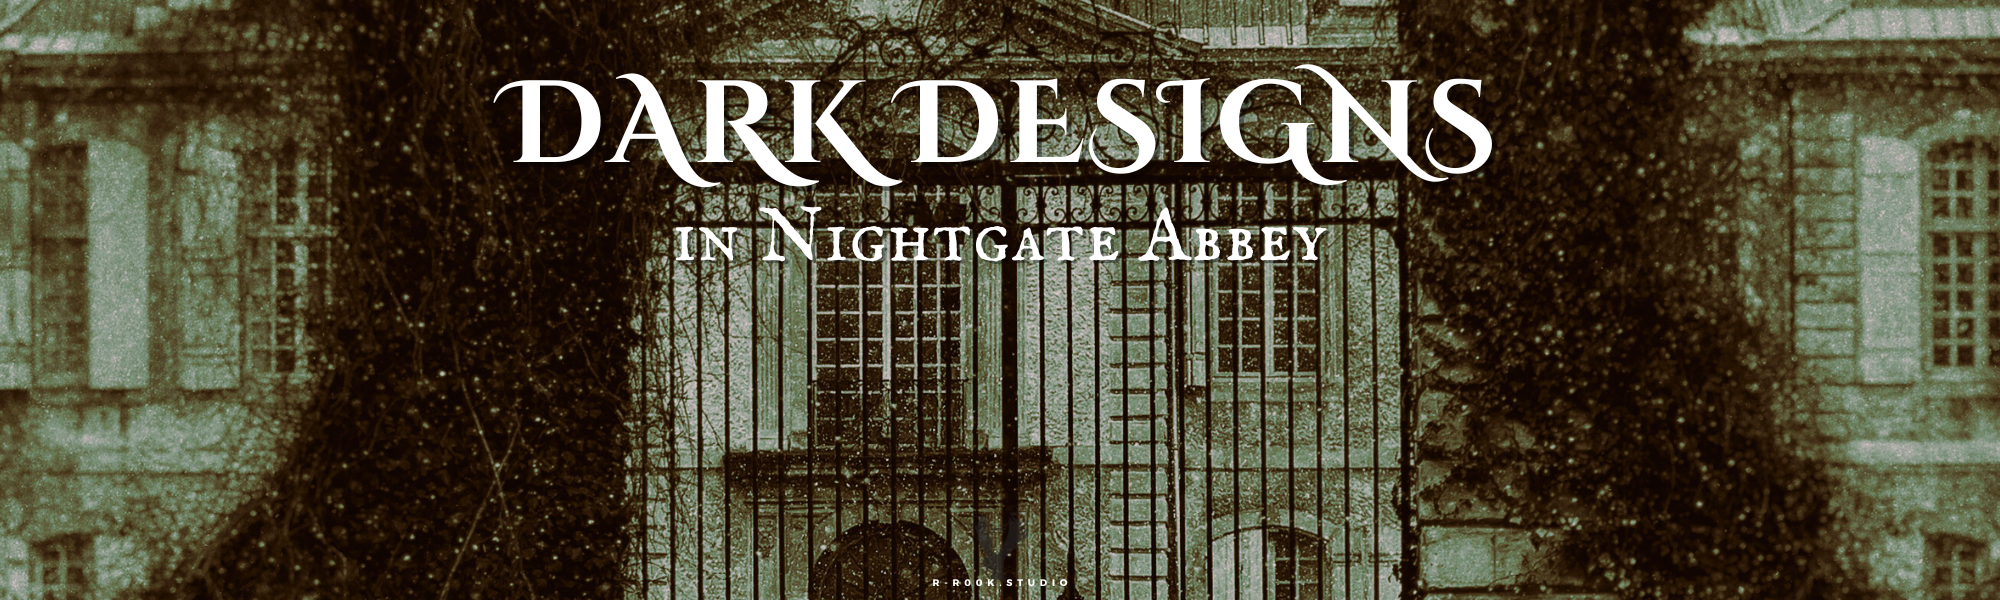 Dark Designs in Nightgate Abbey